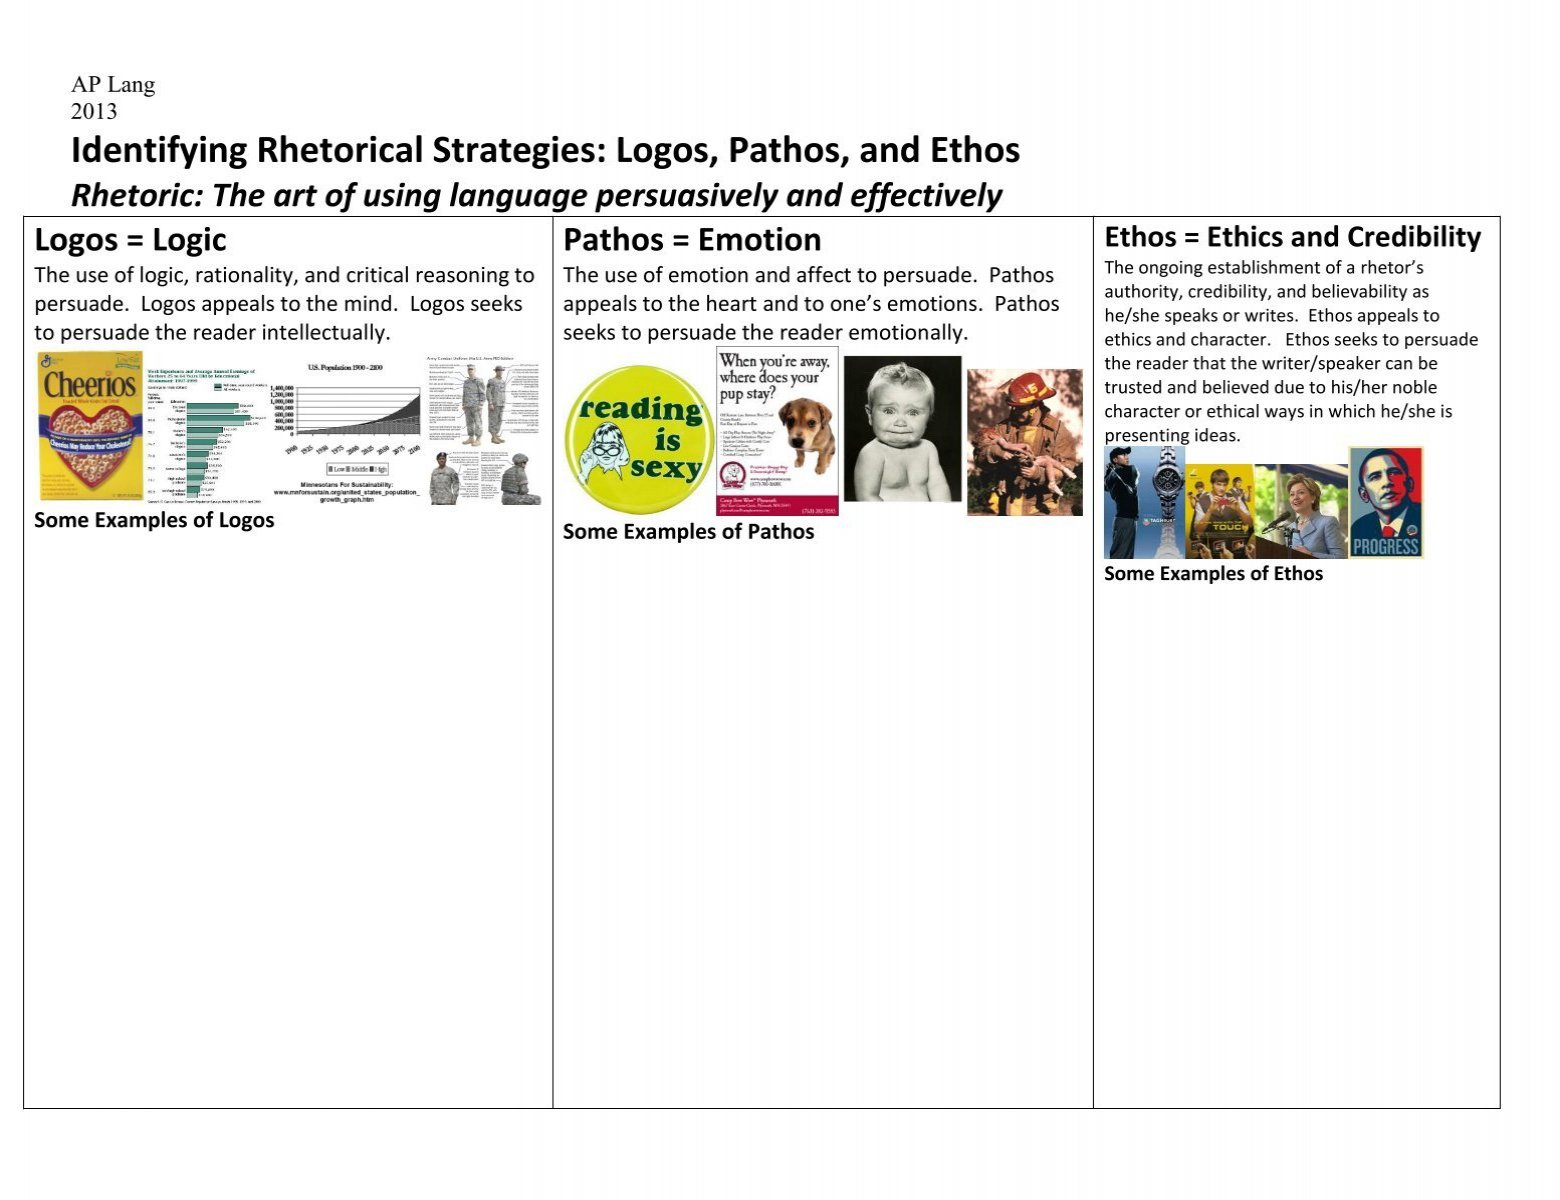 Ethos, Pathos, and Logos - The Rhetorical Strategies